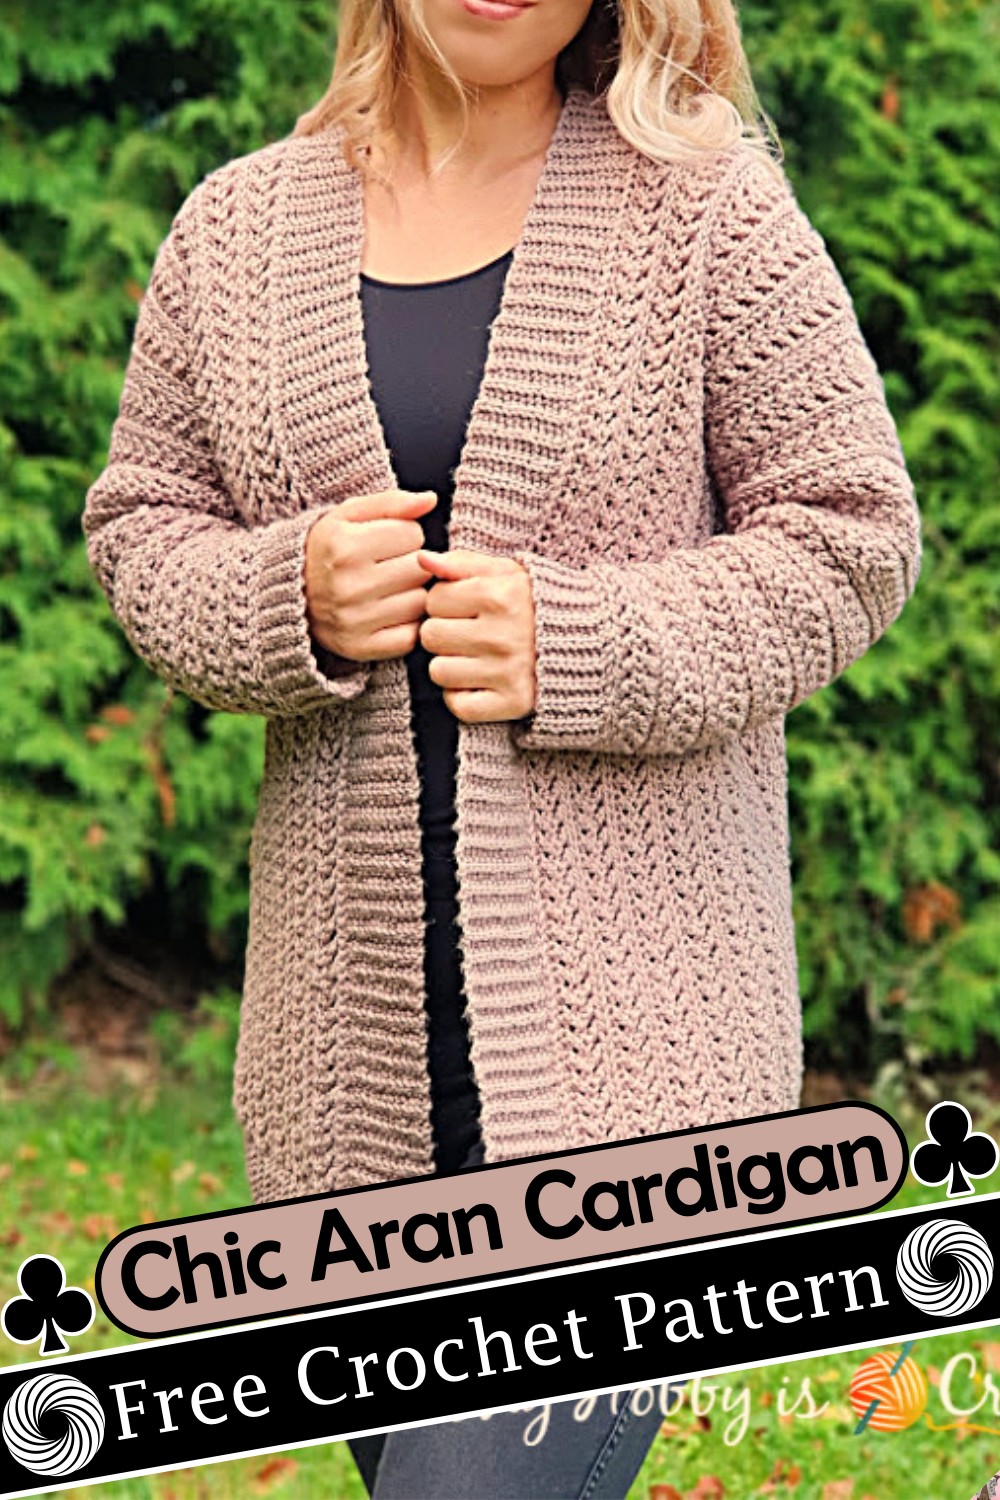 Chic Aran Cardigan Free Crochet Pattern